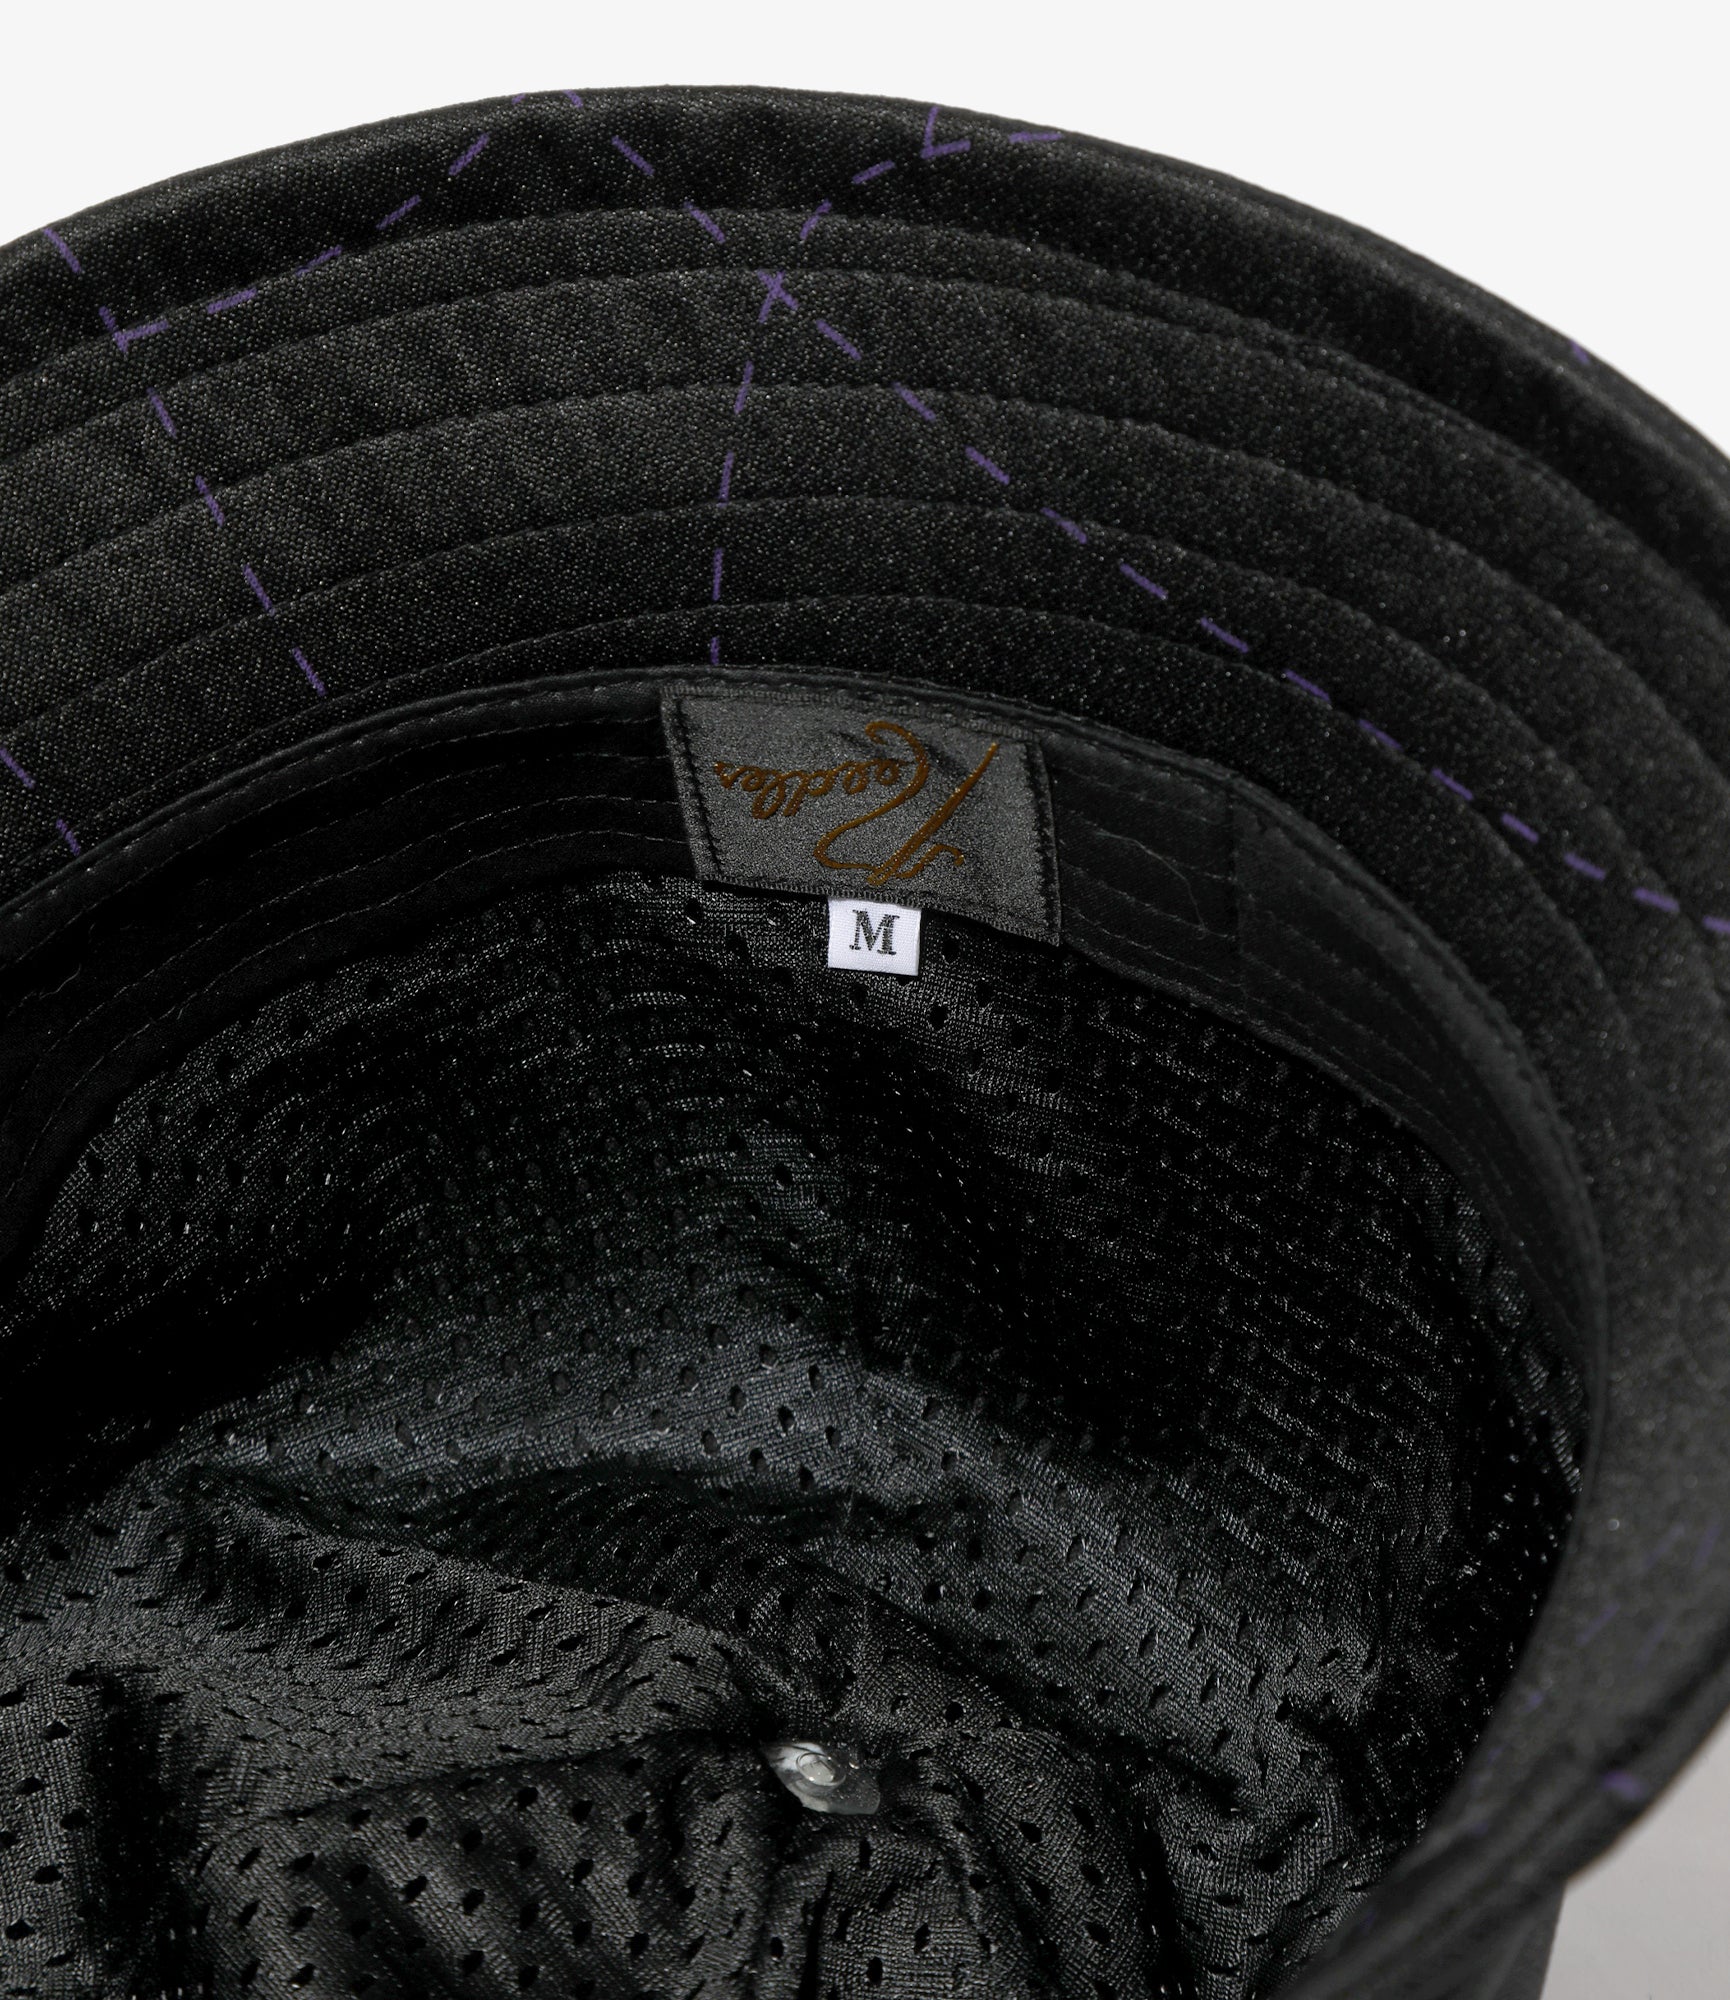 Needles x DC Shoes Bermuda Hat - Poly Smooth / Printed - Black